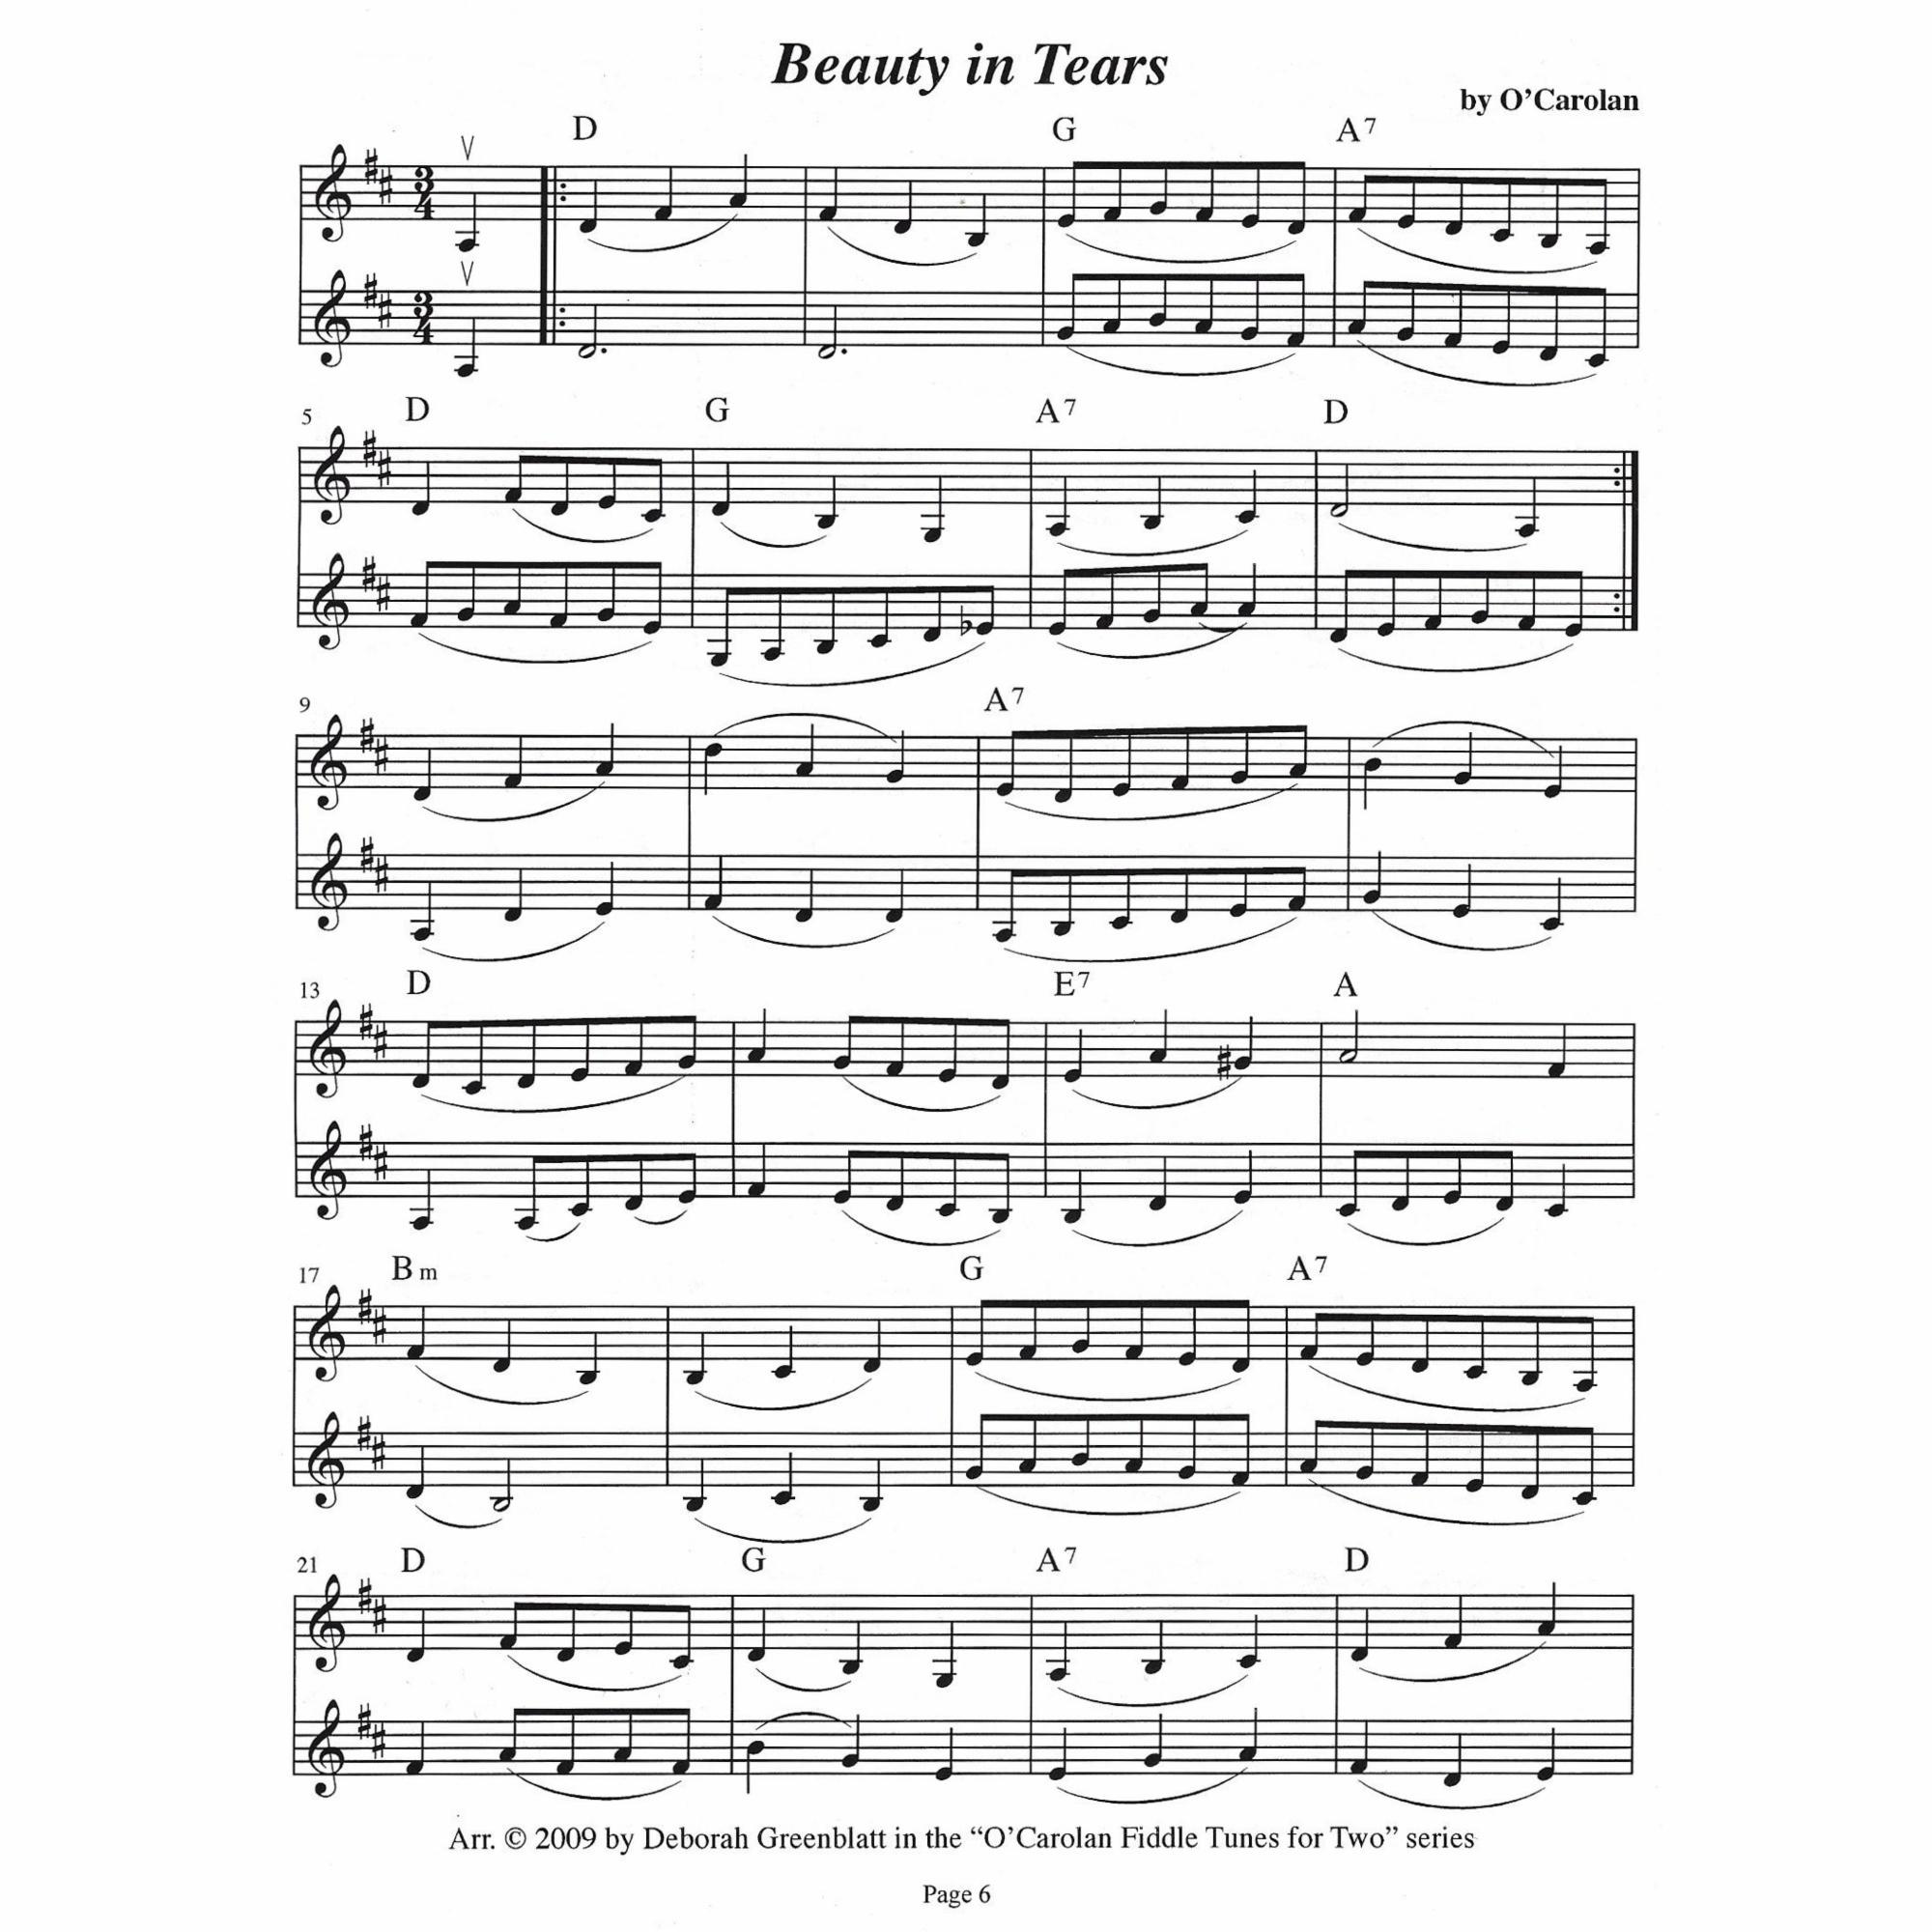 Sample: Two Violins (Pg. 6)